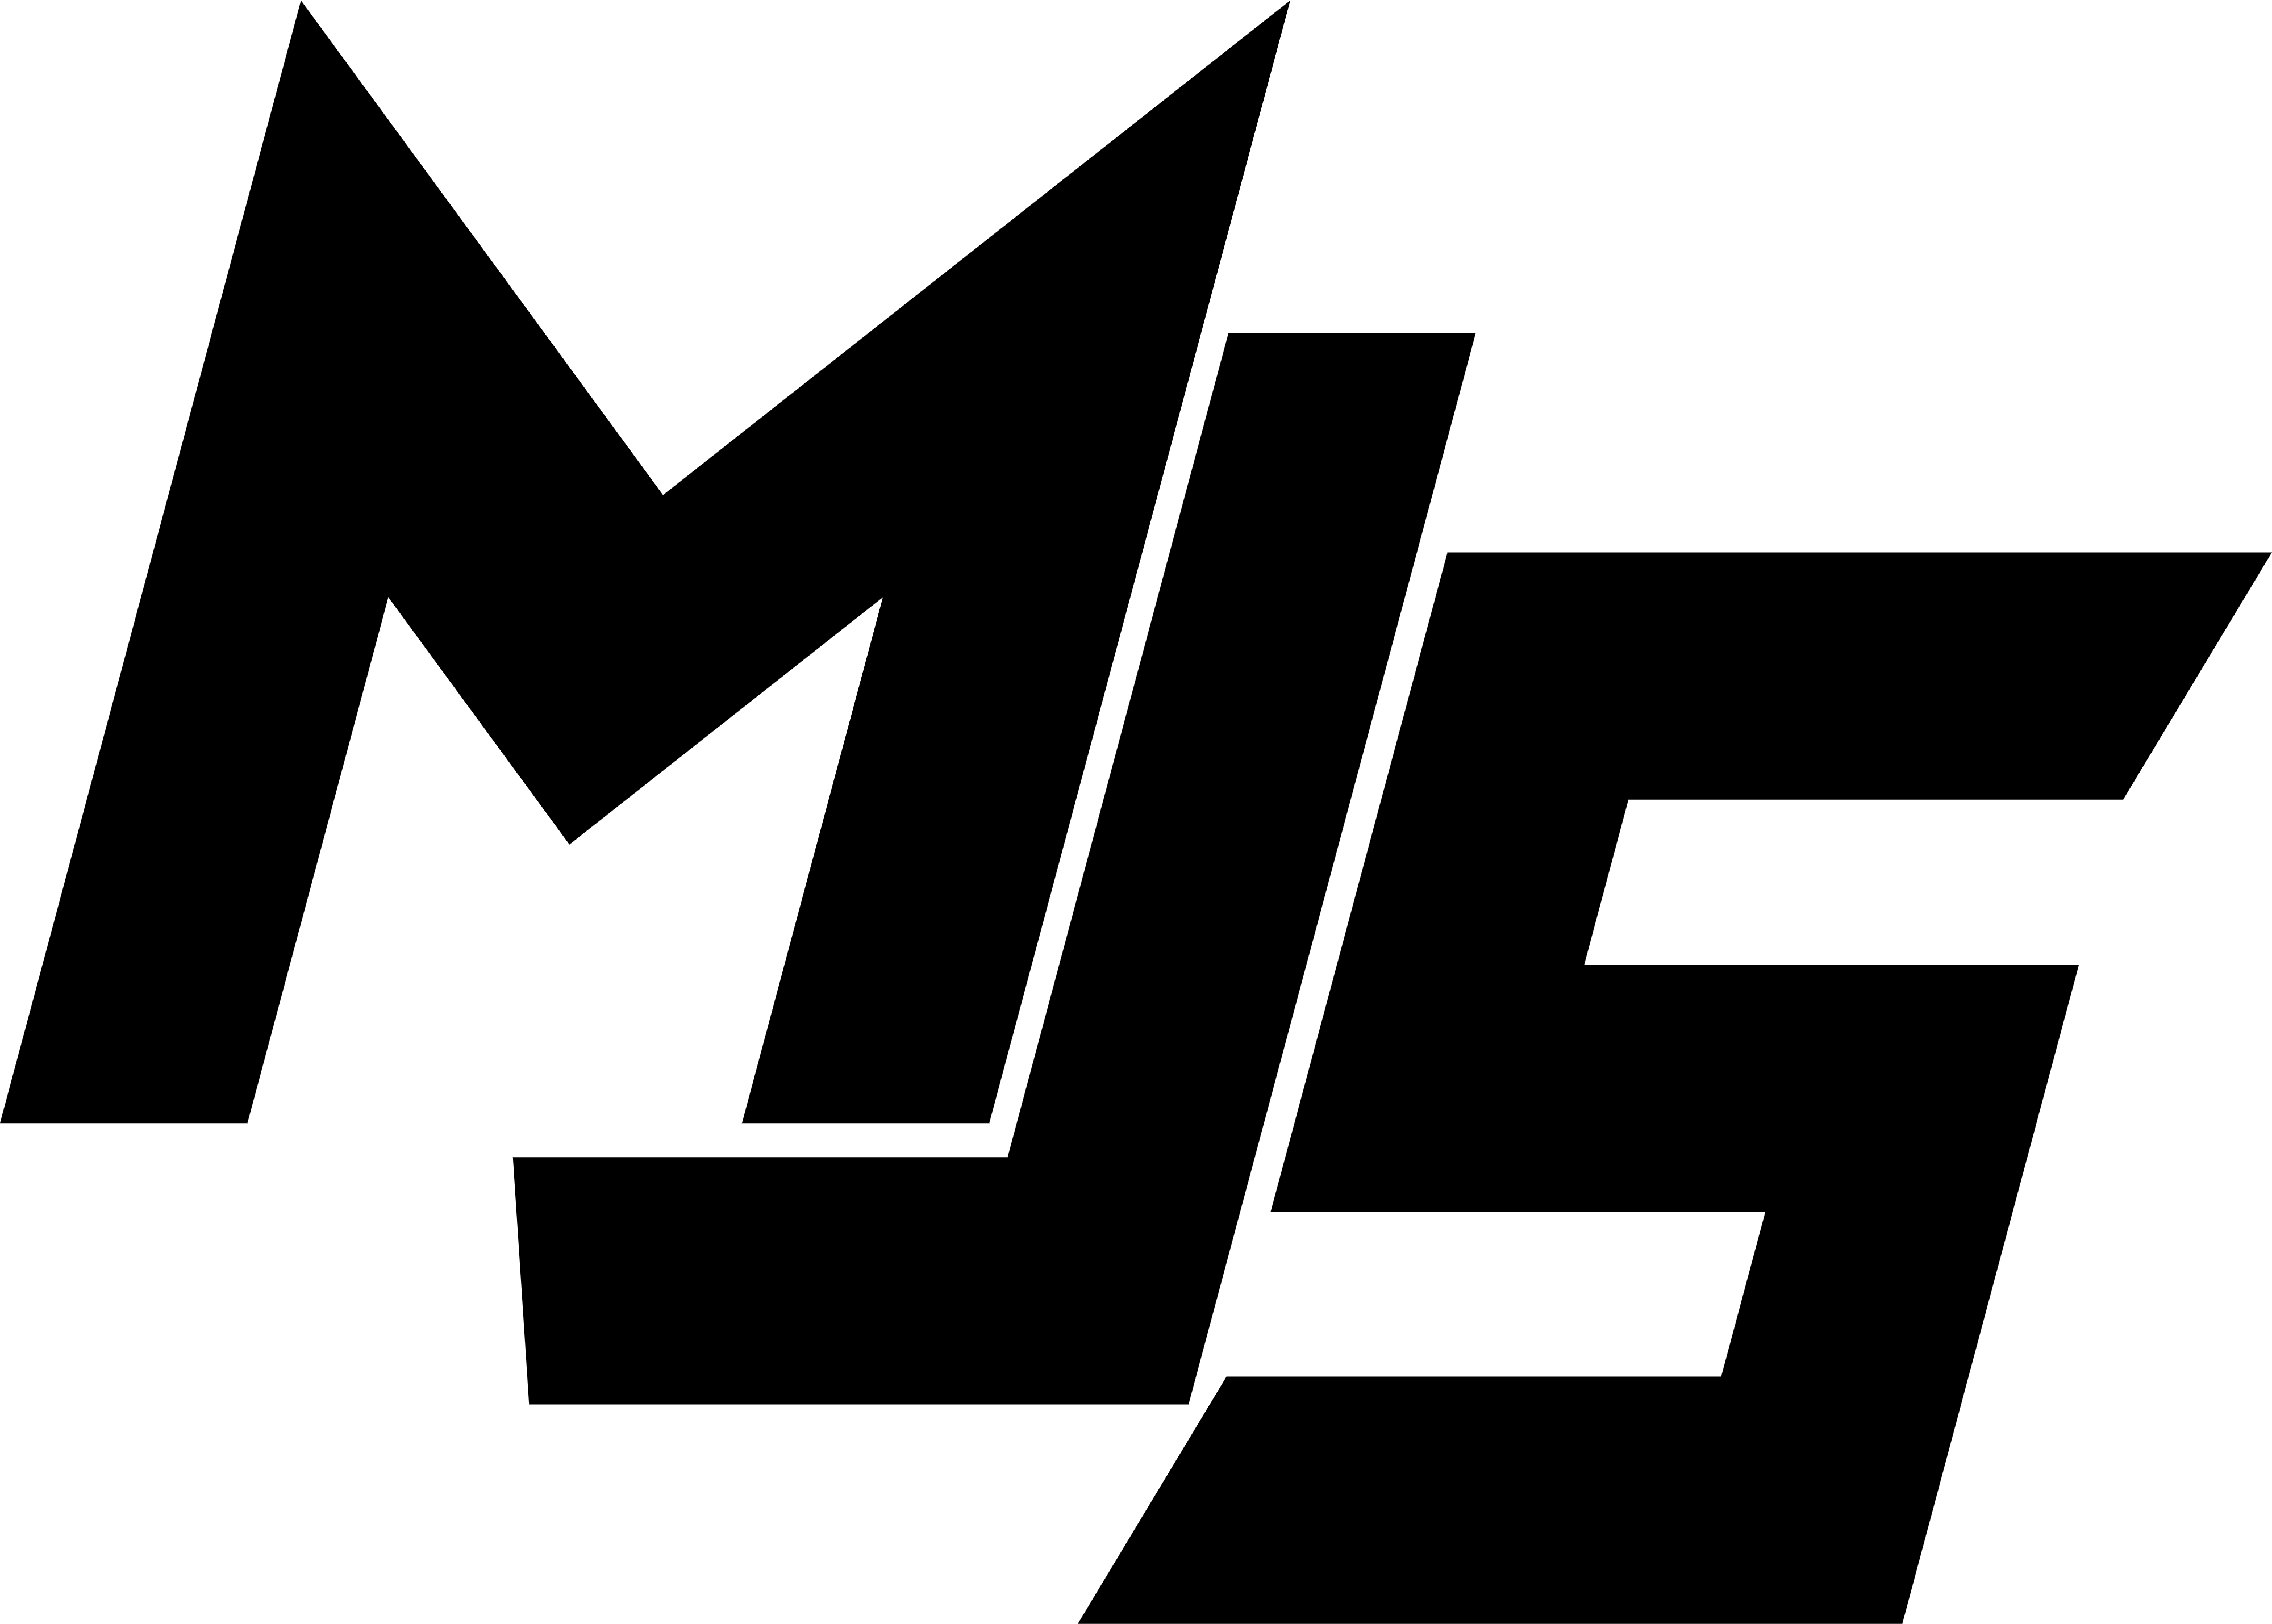 MJS Logo